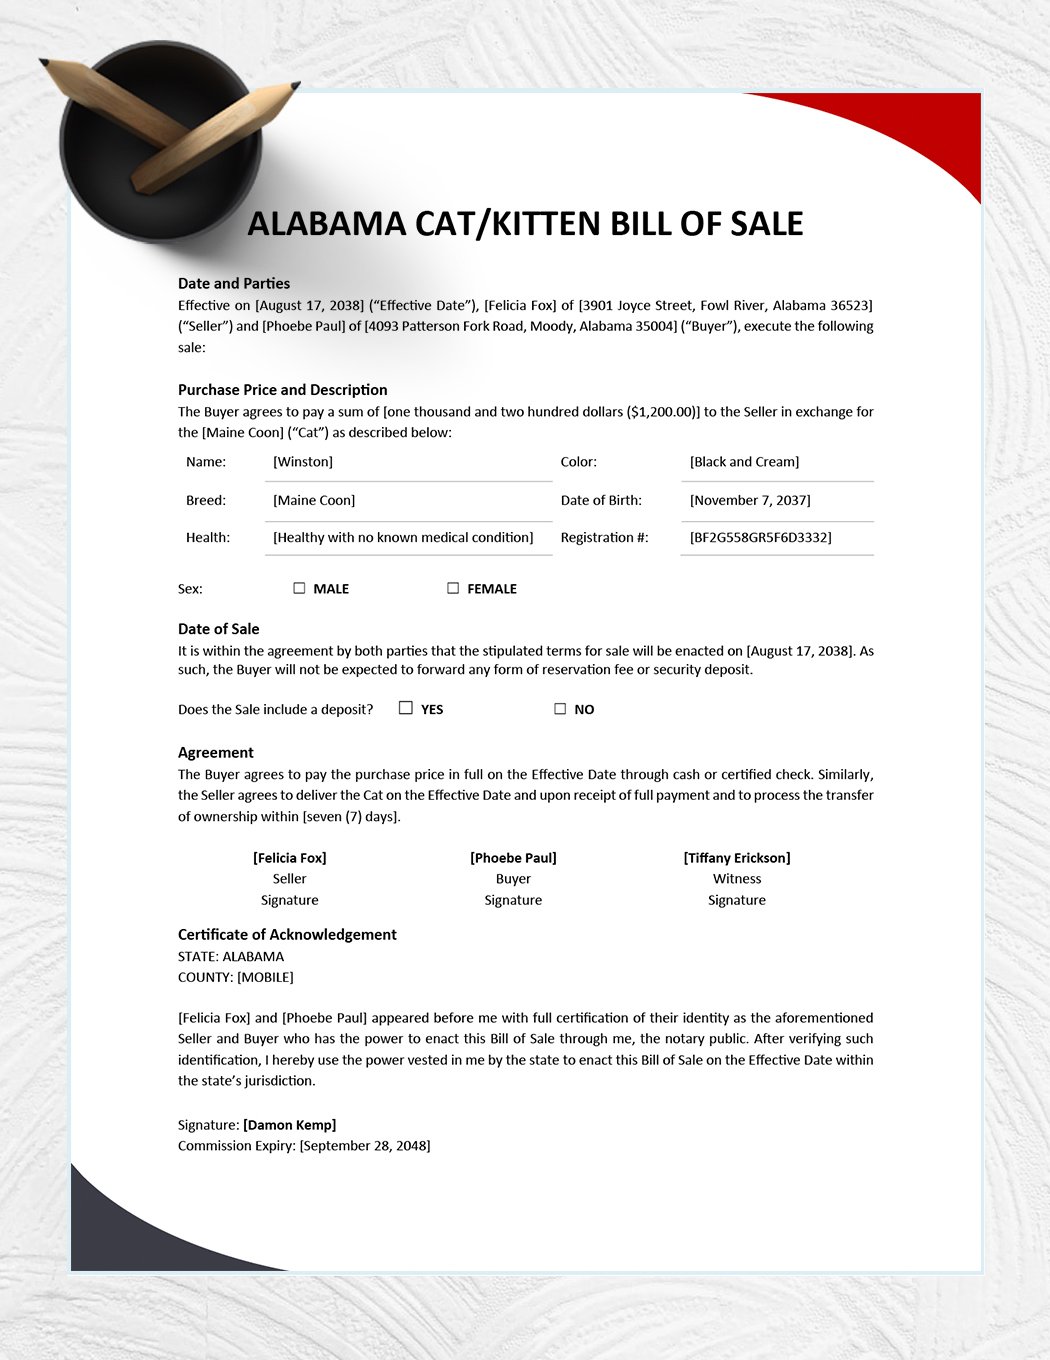 Alabama Cat / Kitten Bill of Sale Form Template